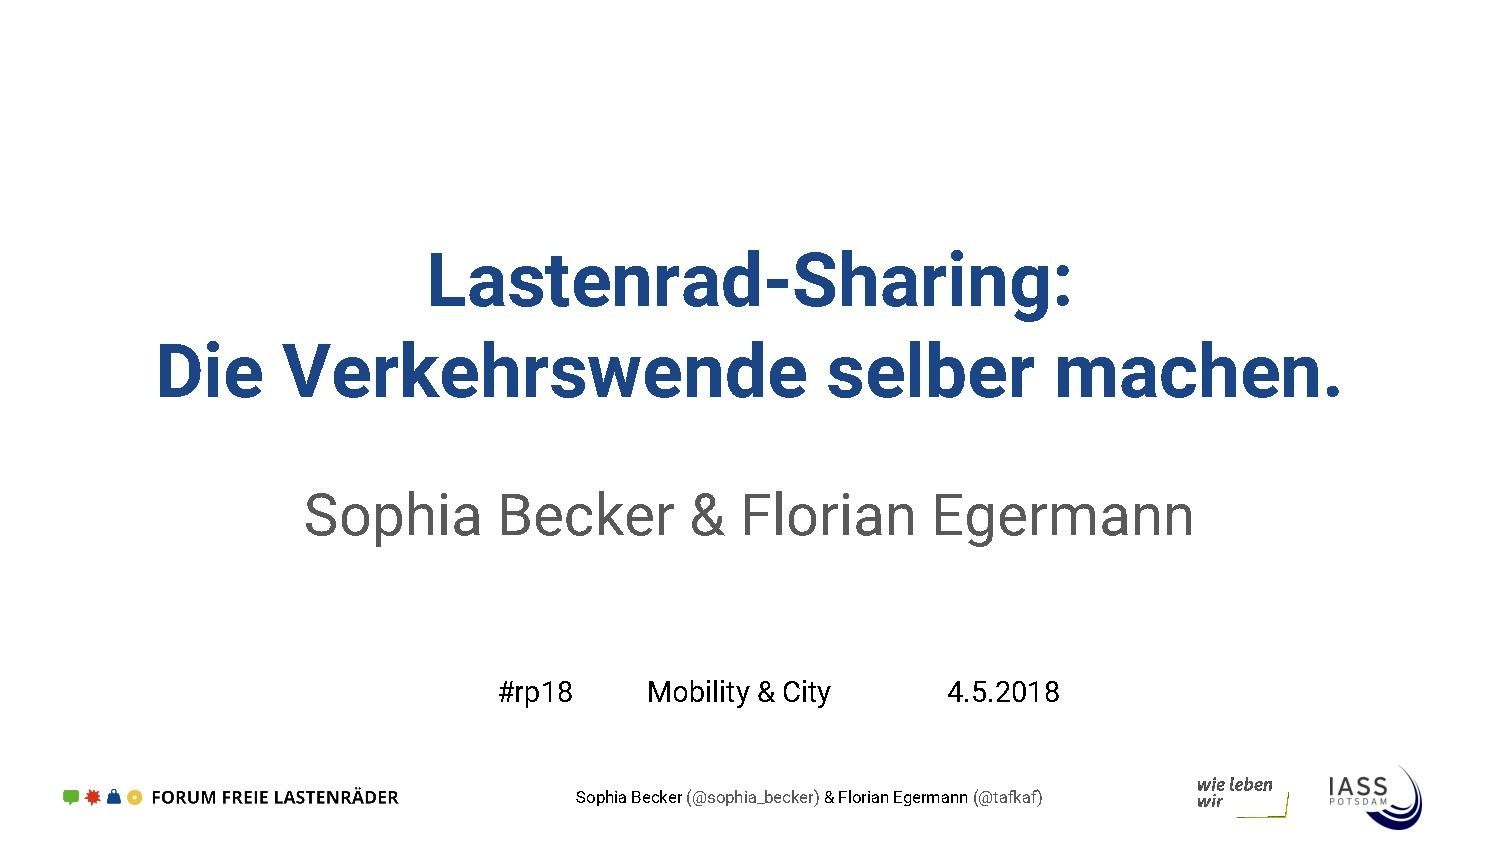 "Becker+Egermann Lastenrad-Sharing Verkehrswende selber machen"